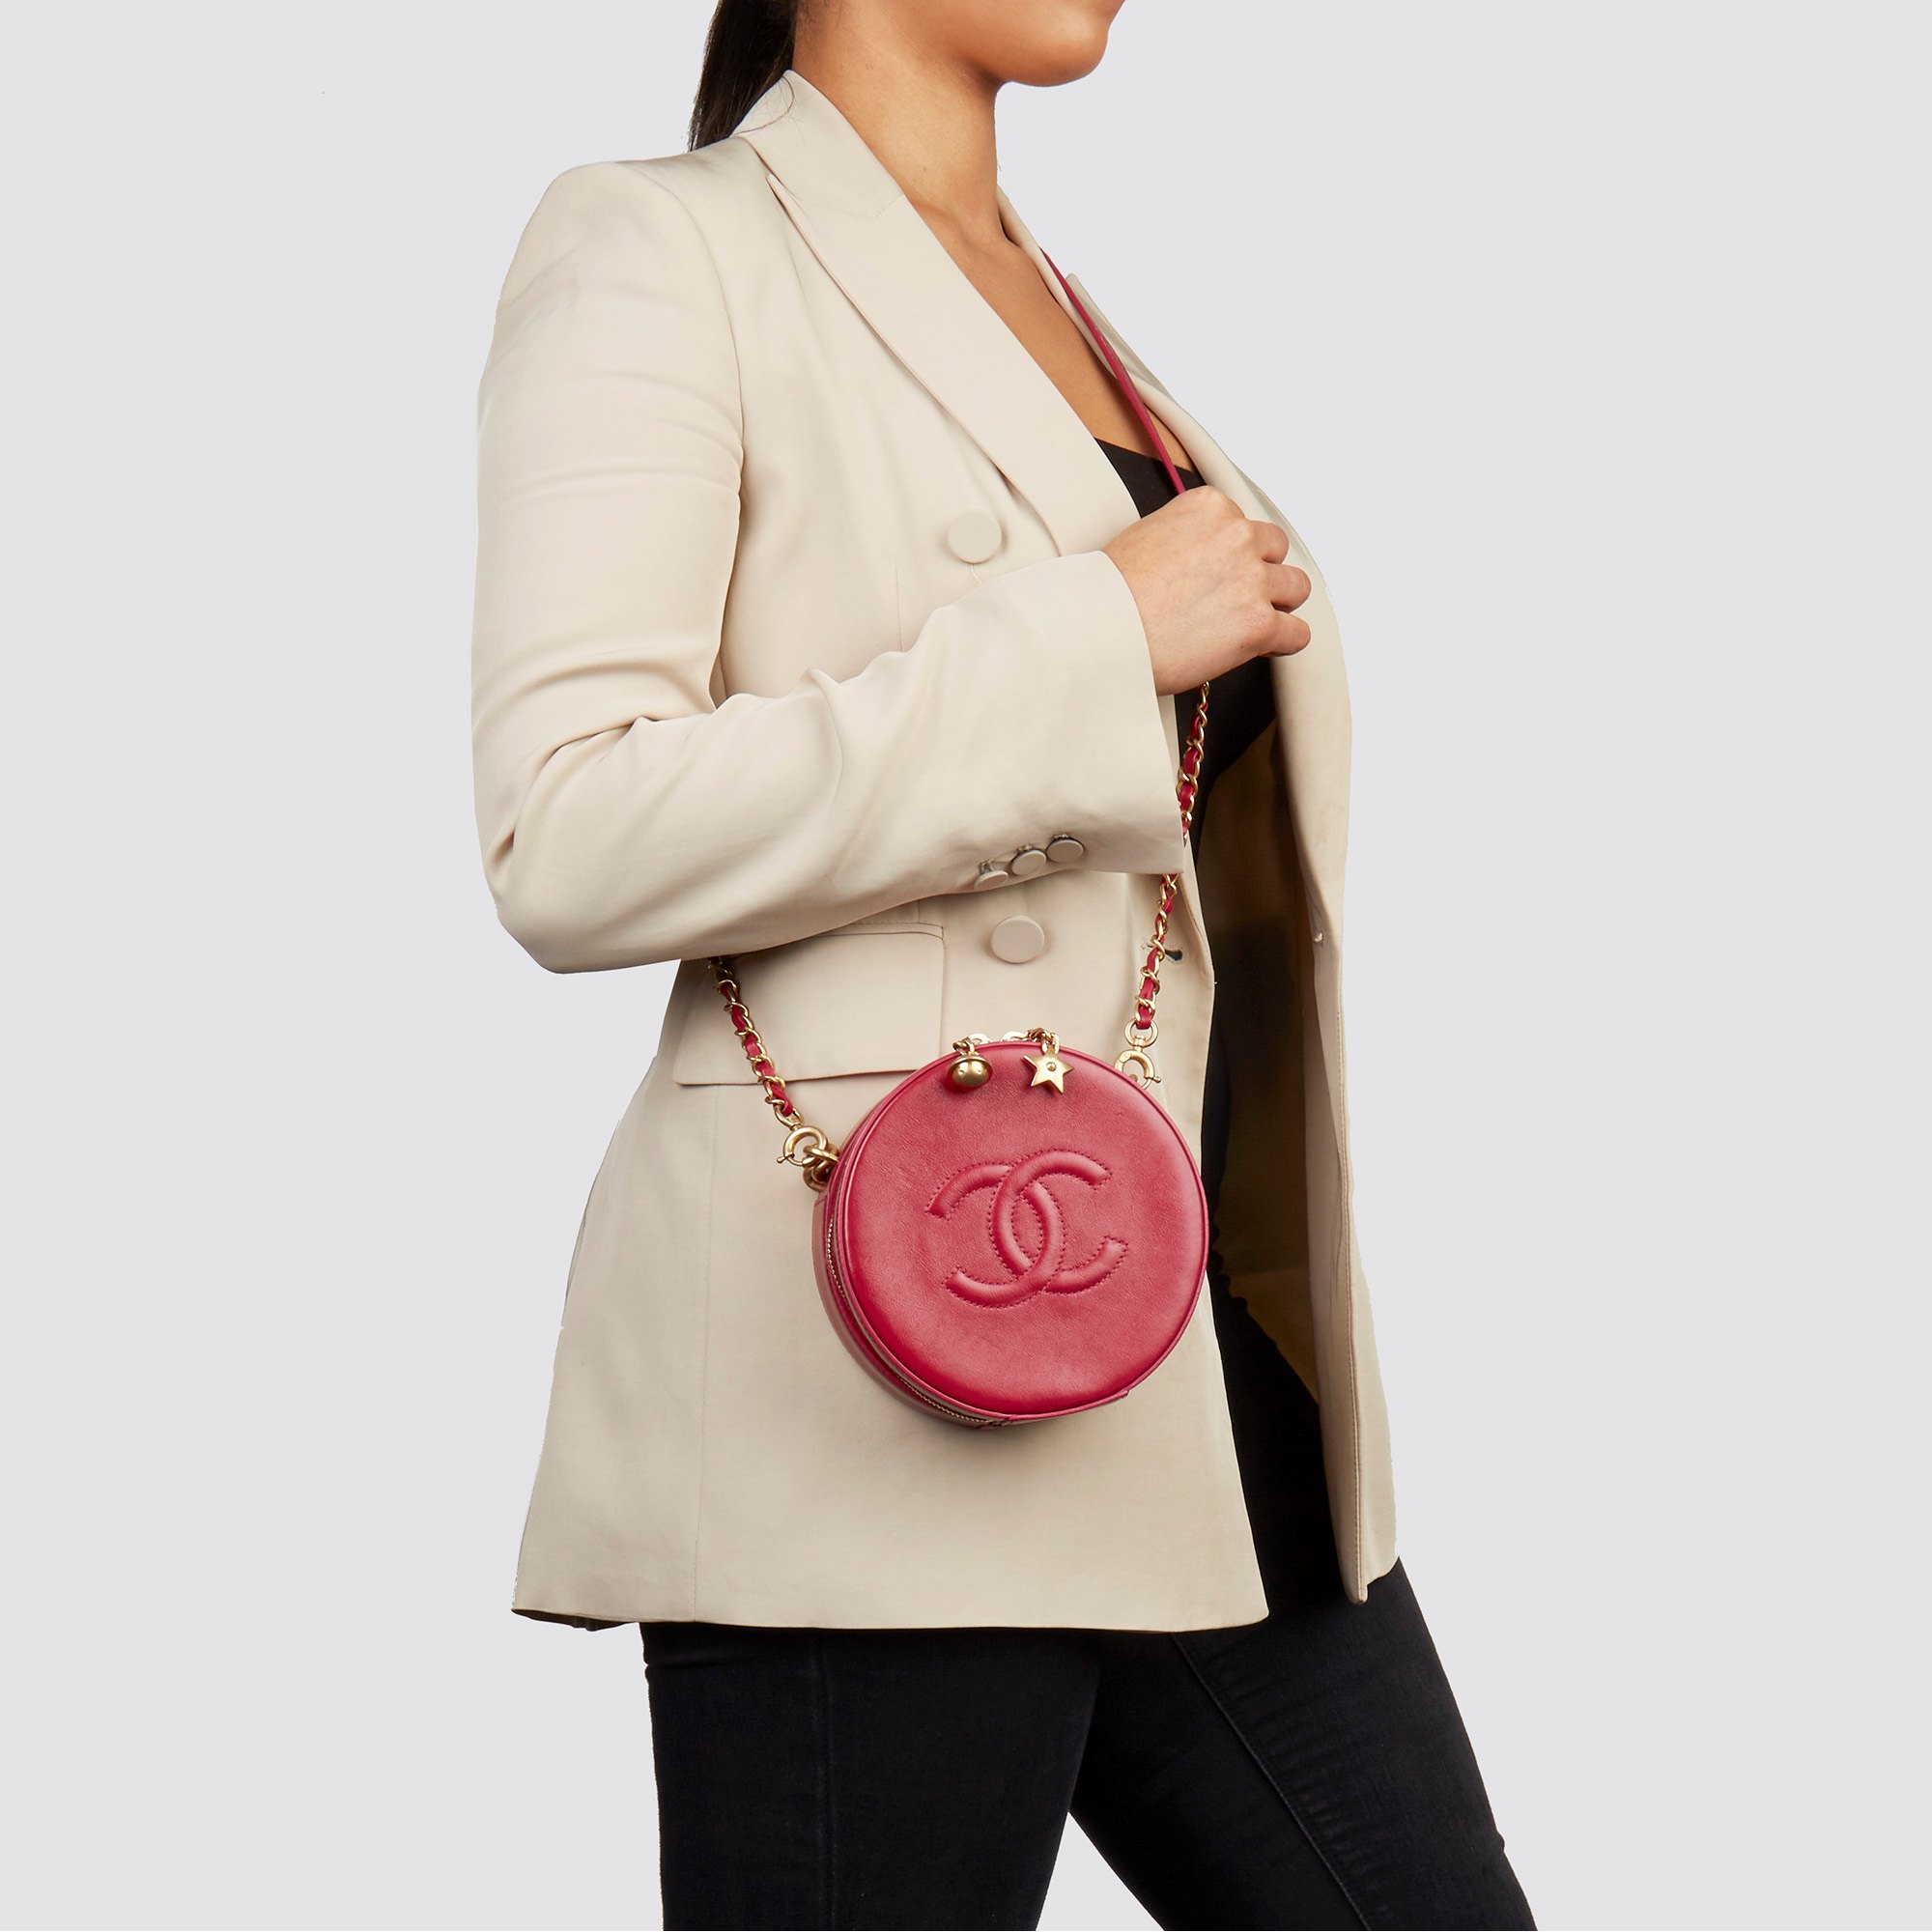 Chanel Raspberry Glazed Calfskin Leather Round as Earth Bag